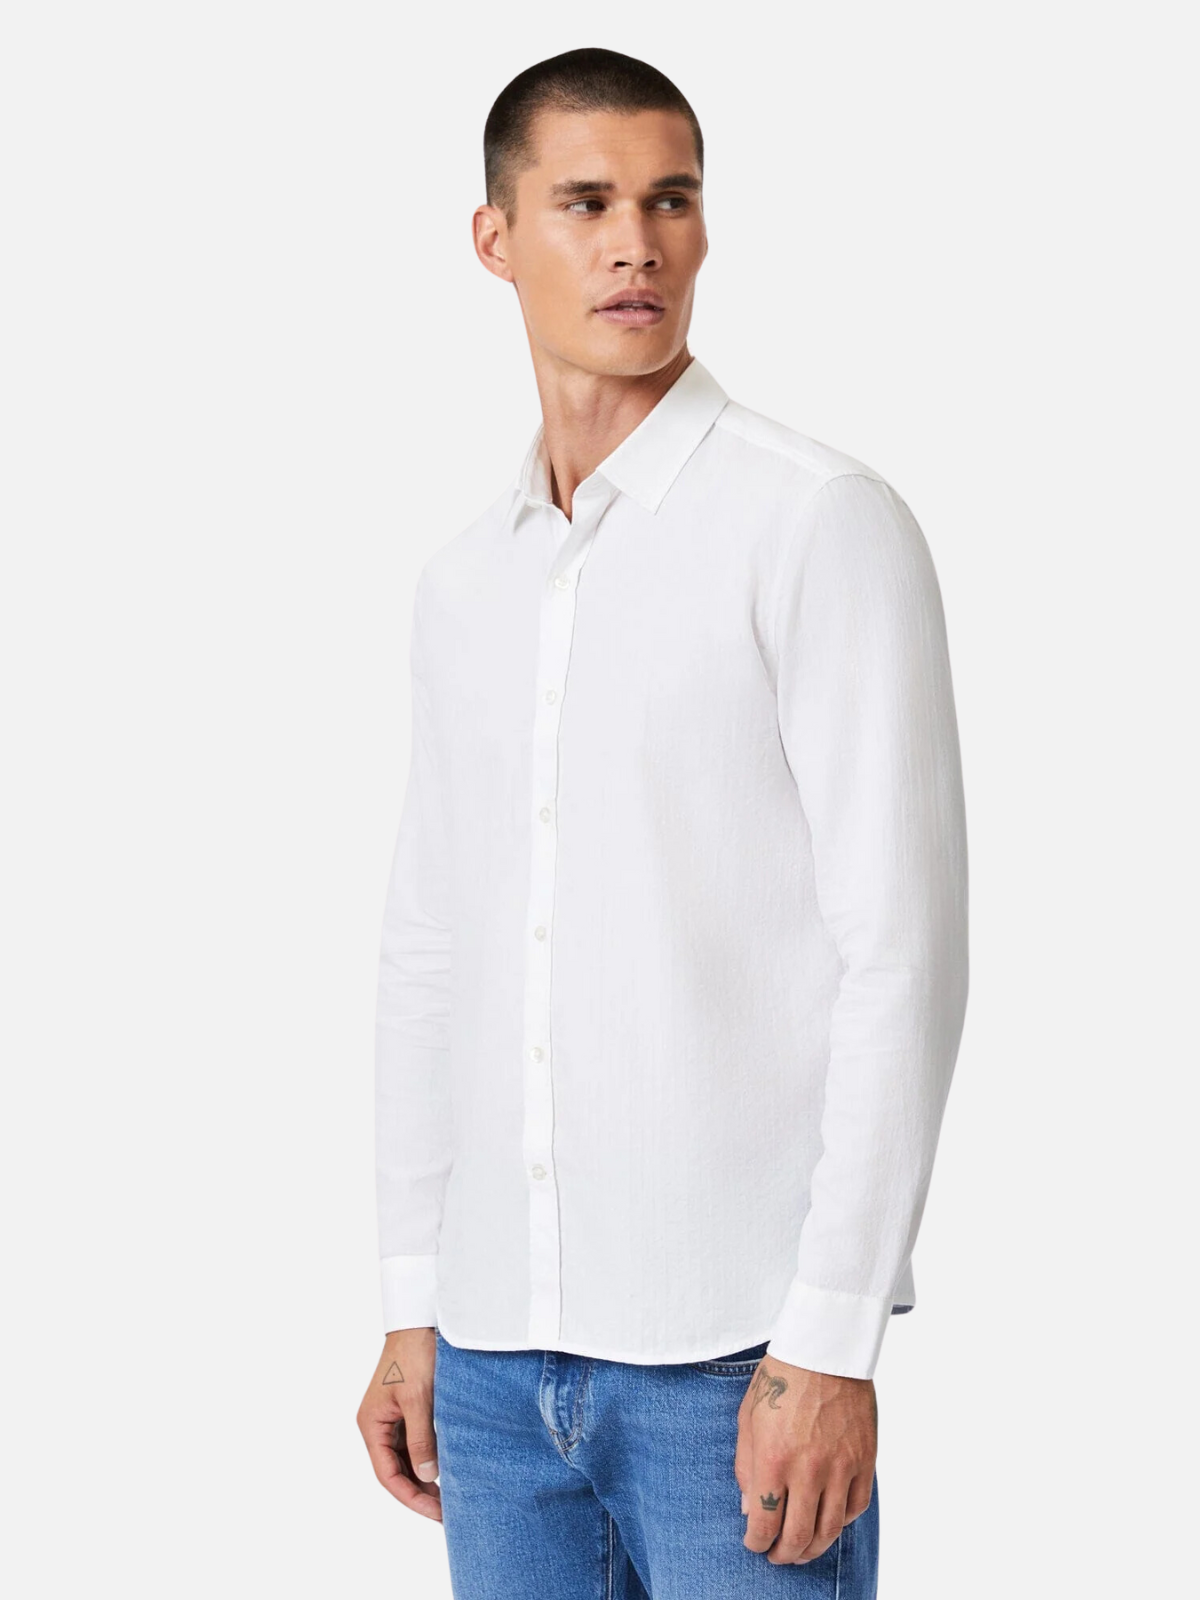 mavi ls long sleeve jacquard shirt white button down dress shirt lightweight 100% cotton embroidered logo kempt athens ga georgia men's clothing store